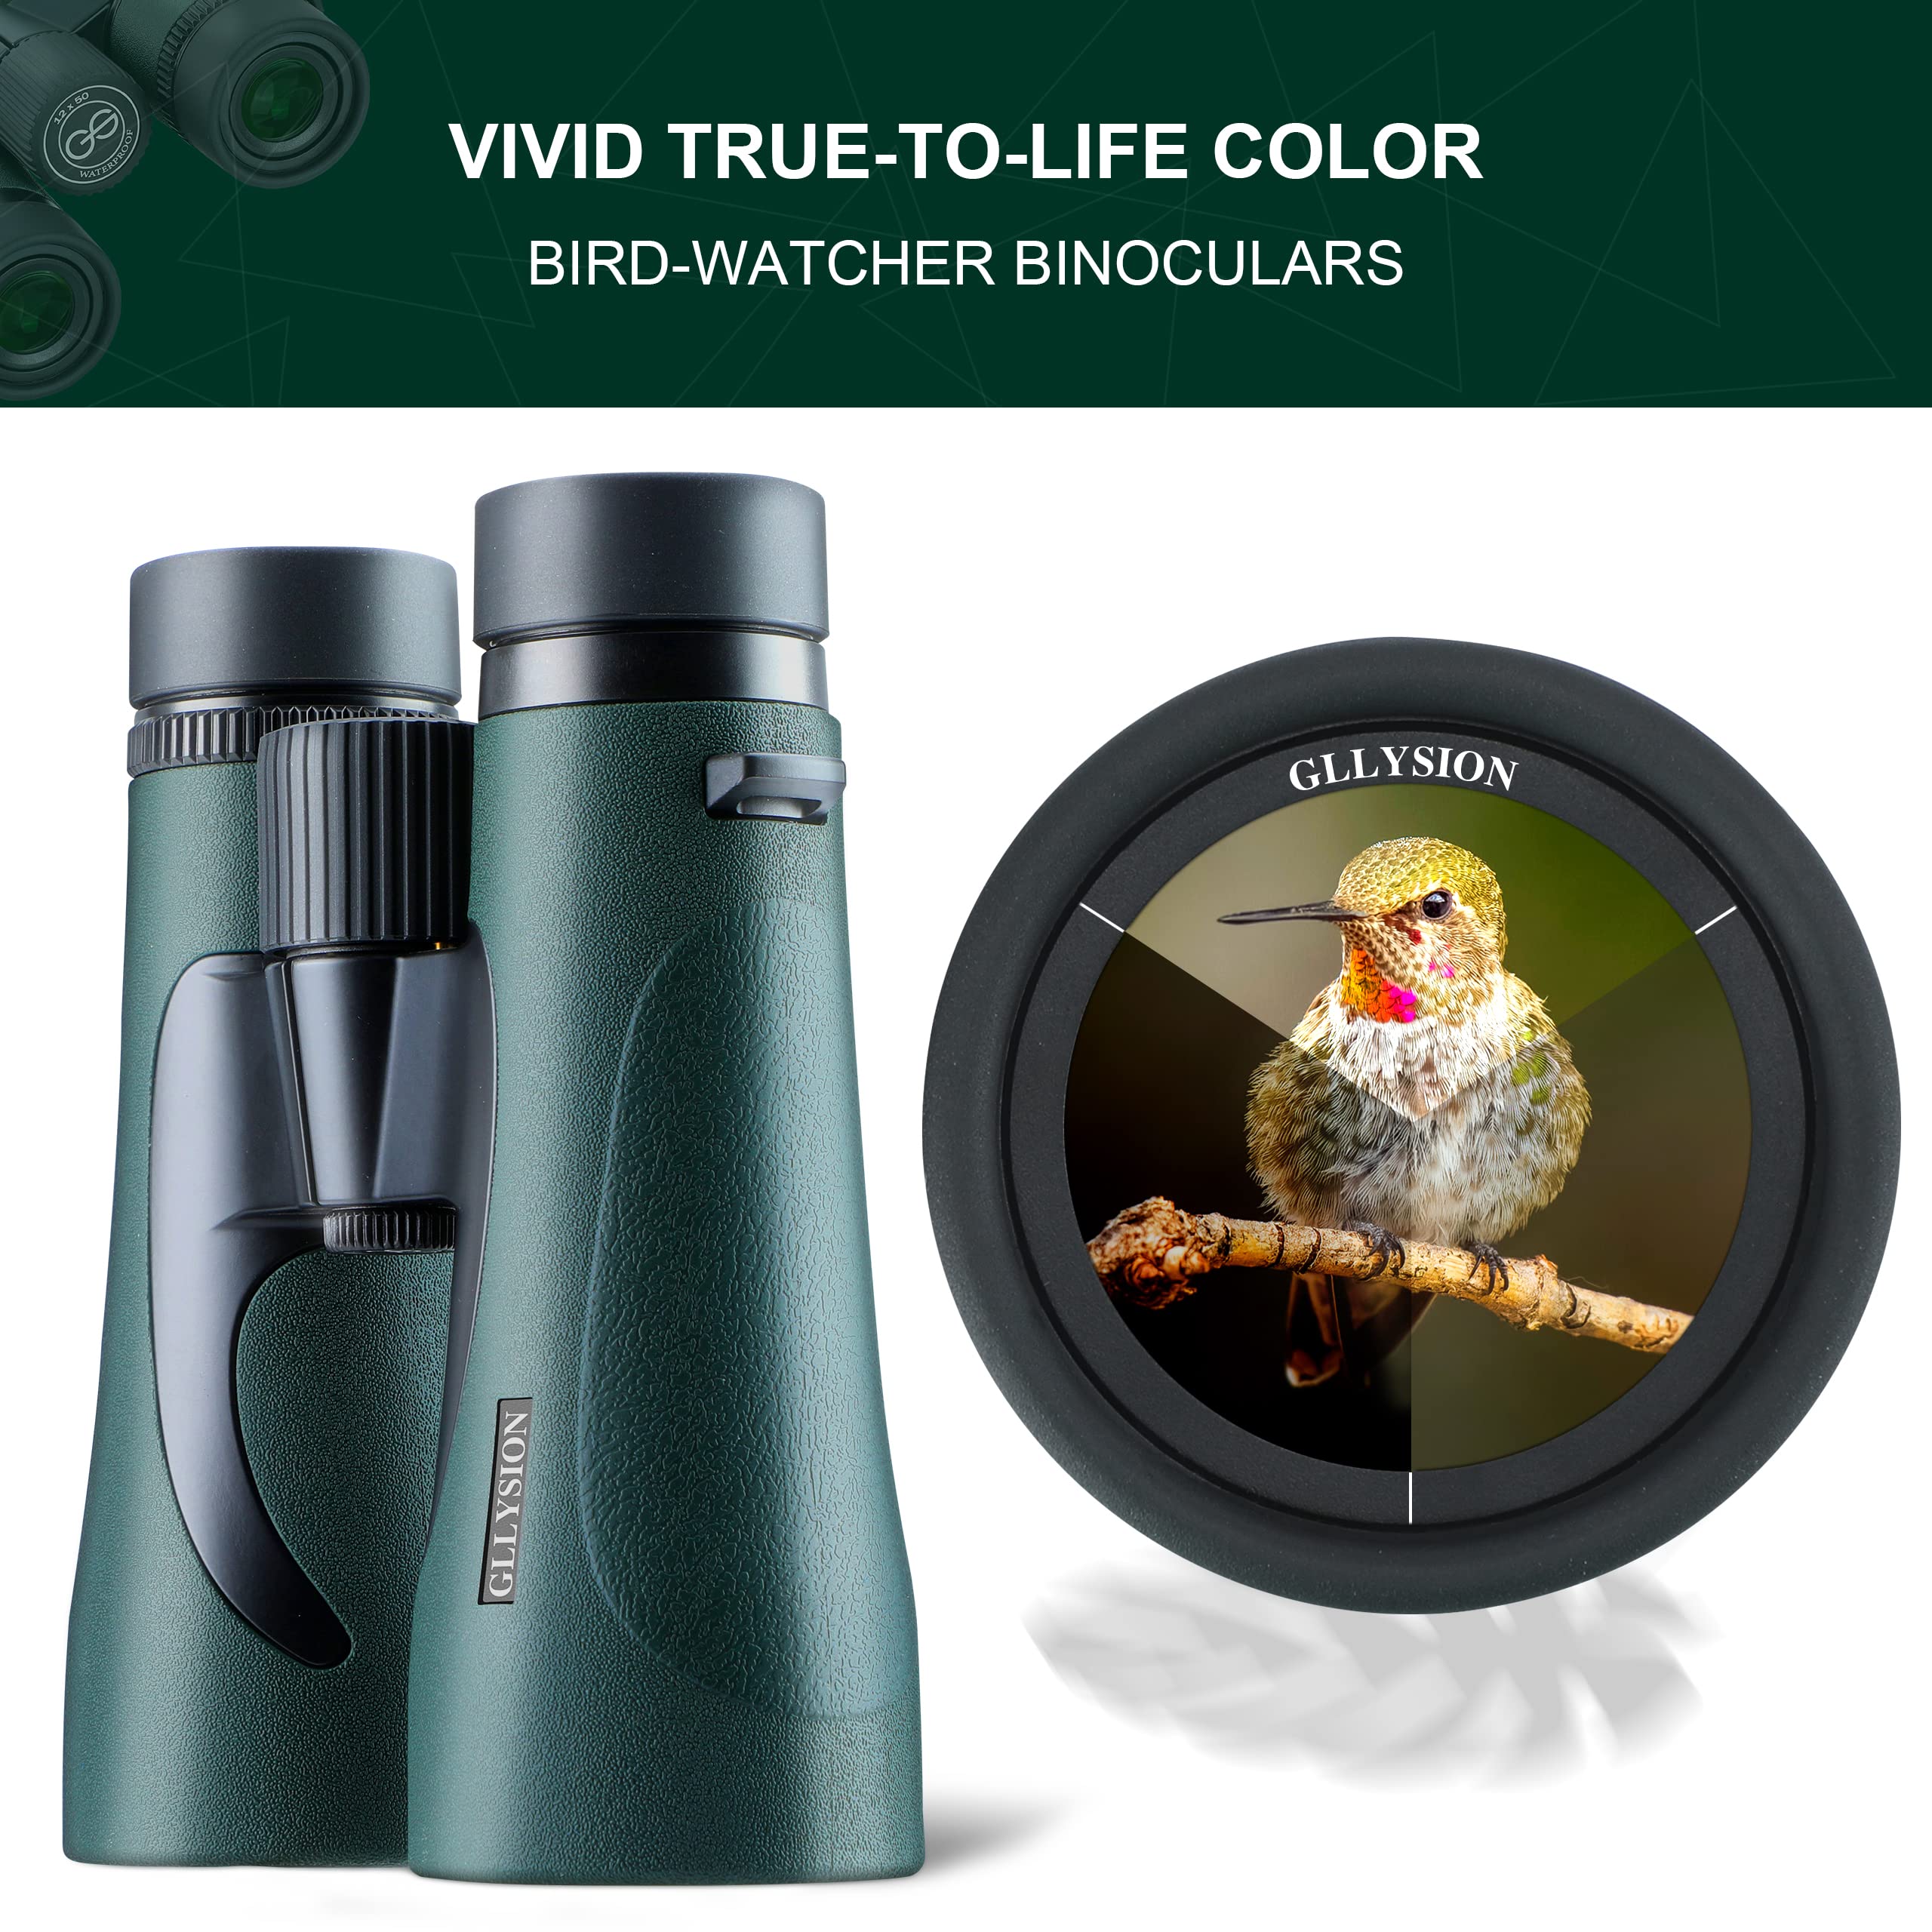 12X50 Professional HD Binoculars for Adults with Phone Adapter, High Power Binoculars with BaK4 prisms, Super Bright Lightweight & Waterproof Binoculars Perfect for Bird Watching, Hunting, Stargazing